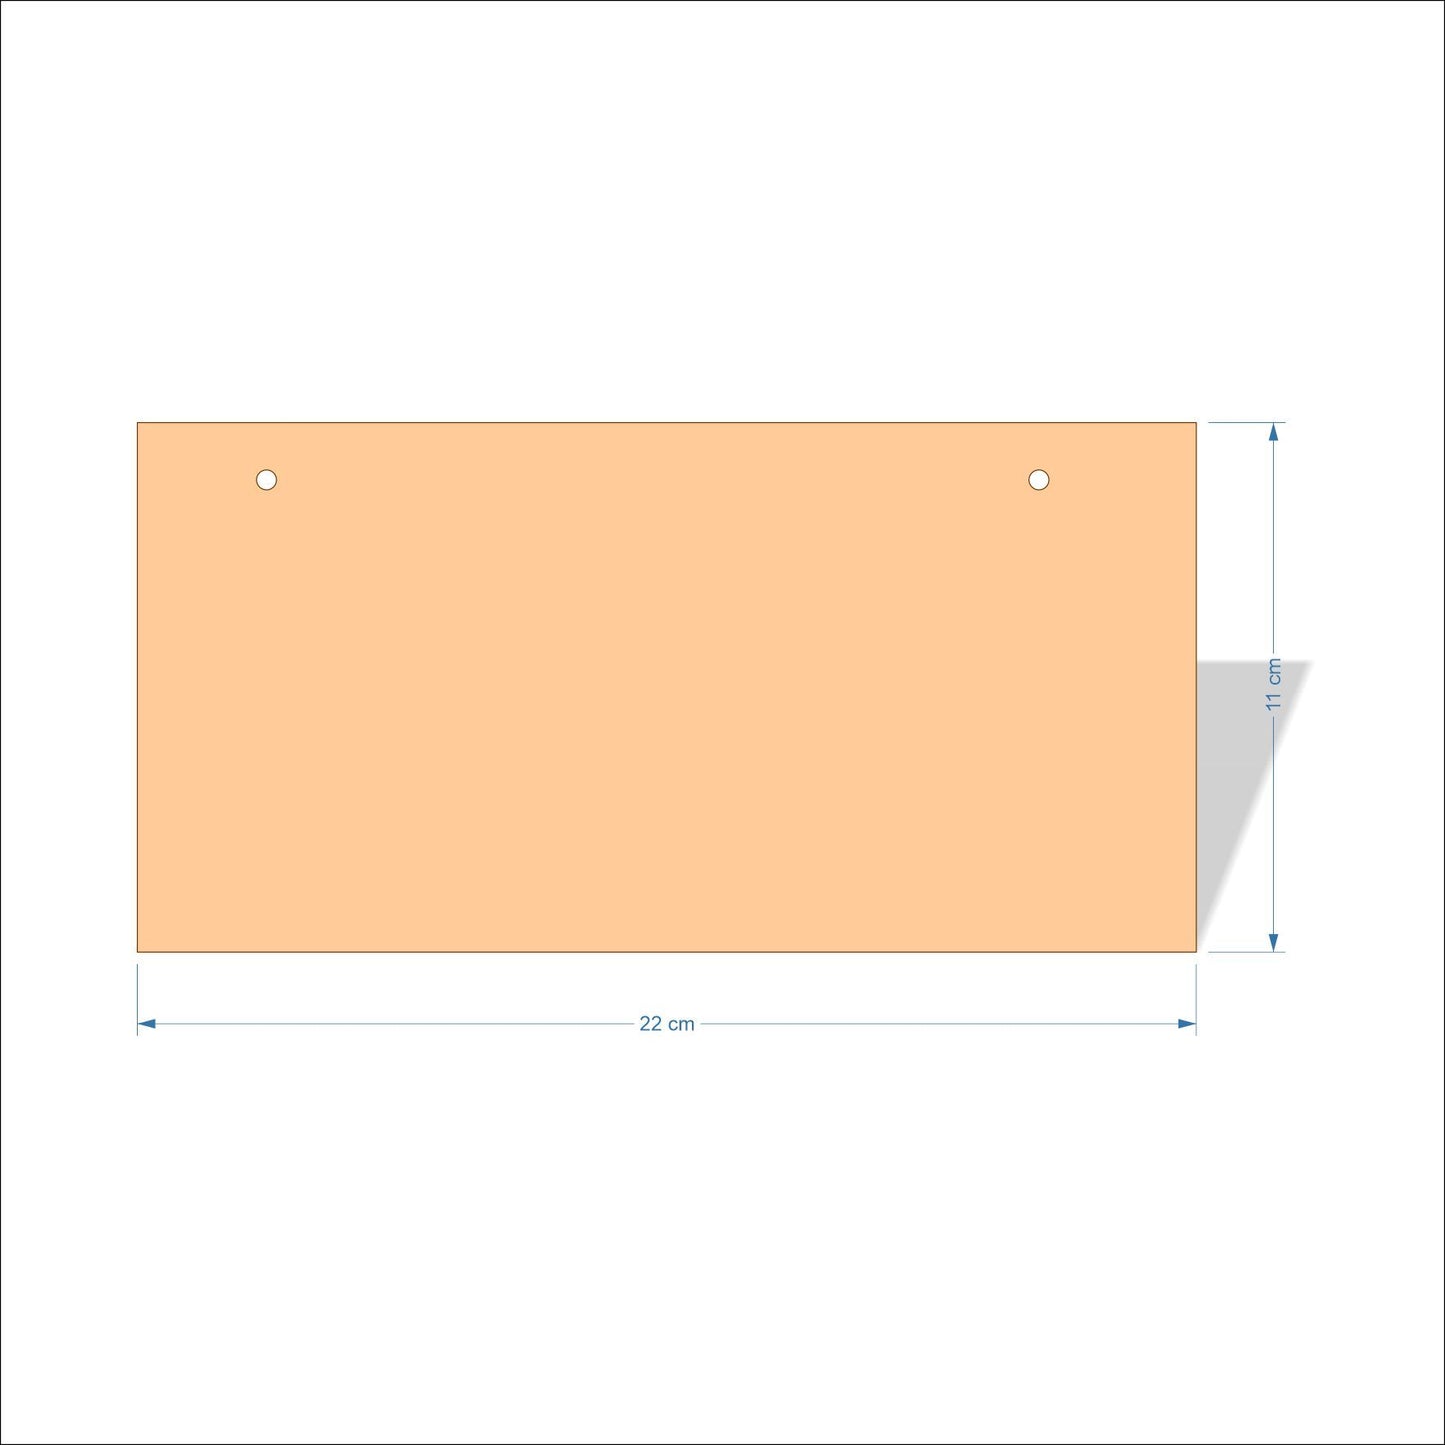 22 cm X 11 cm 3mm MDF Plaques with square corners